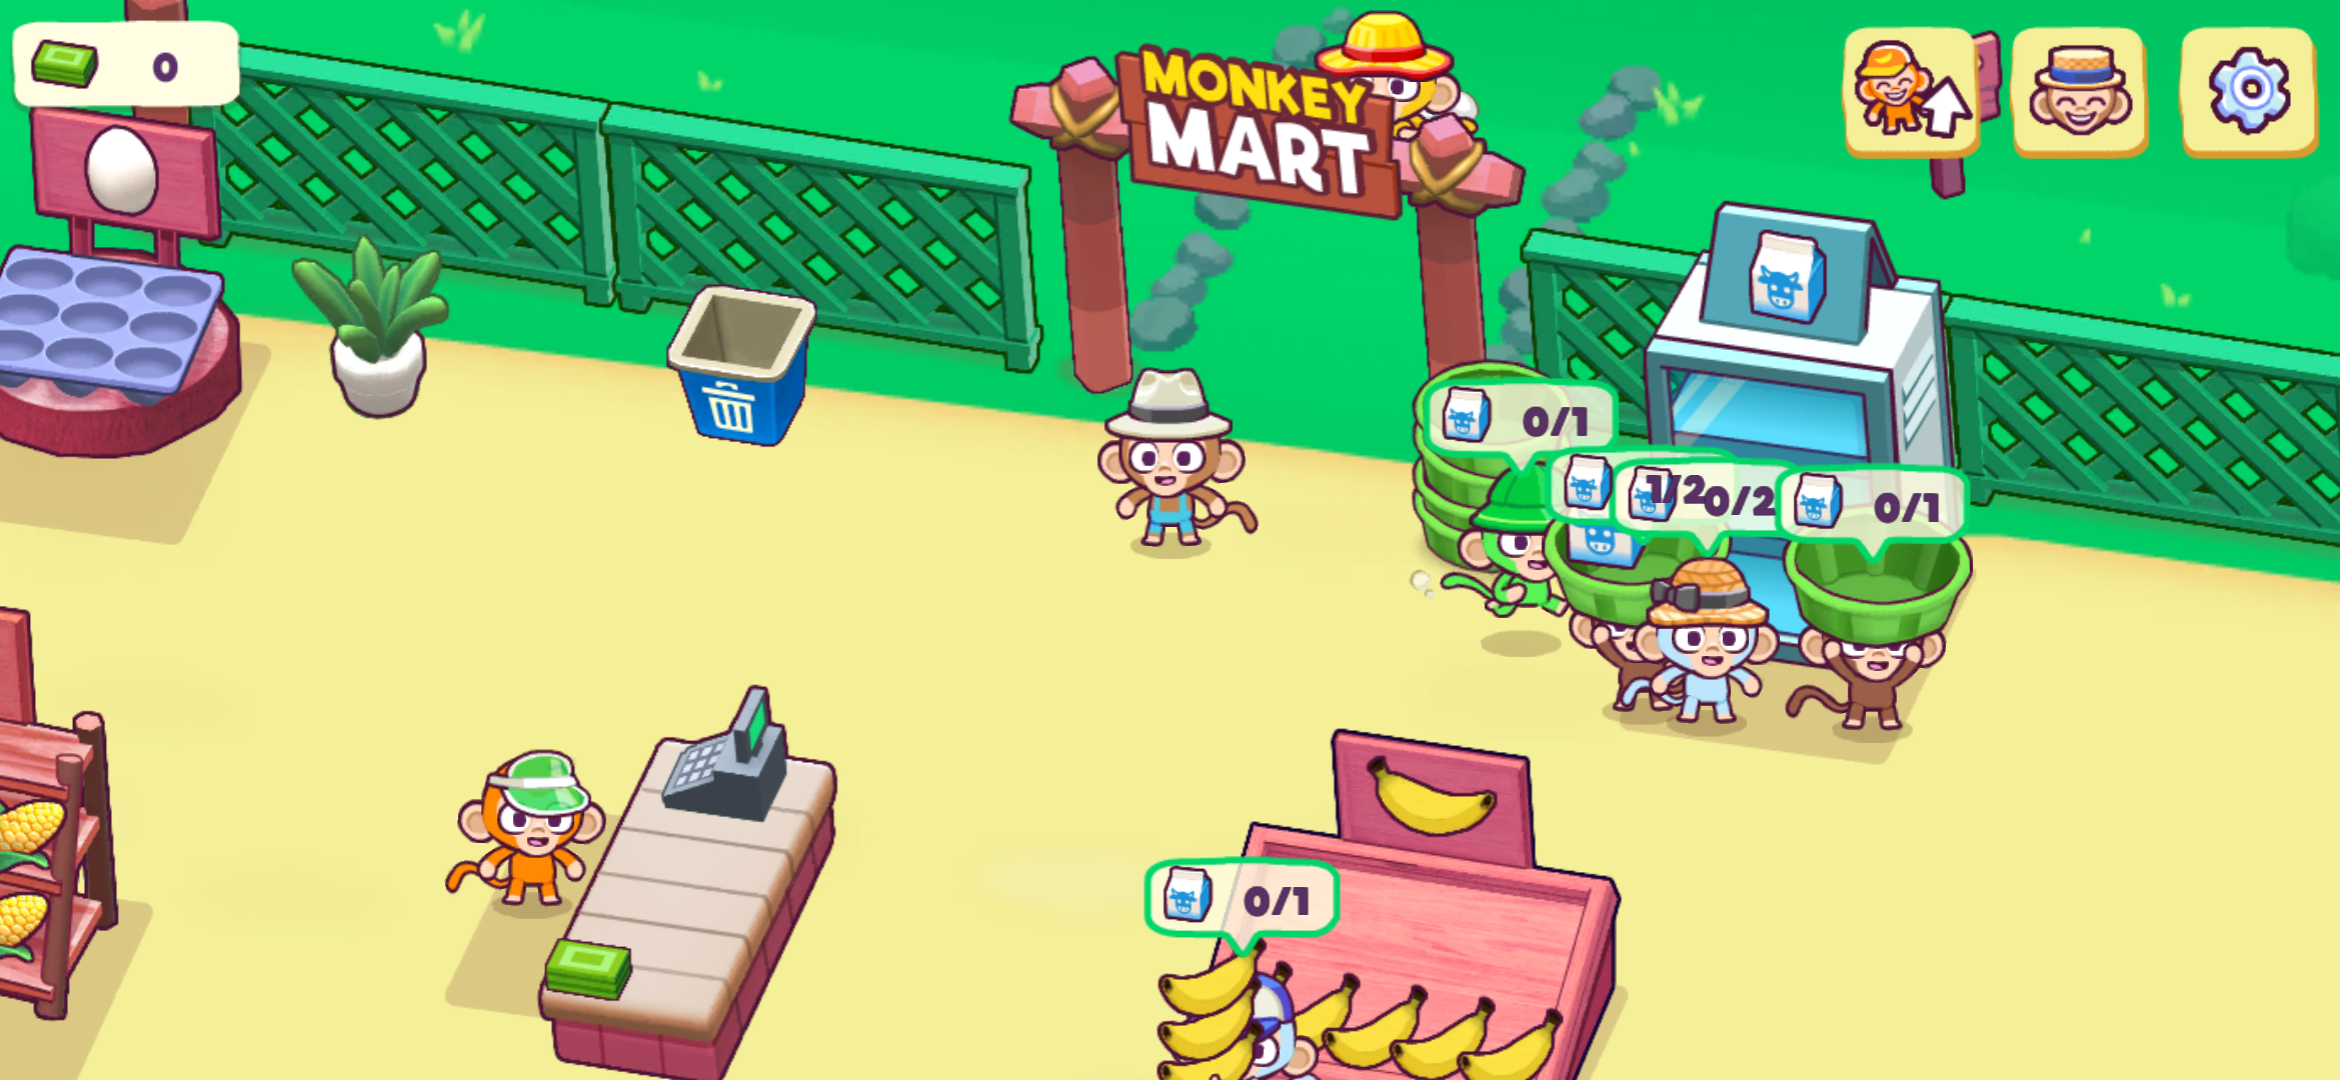 Monkey Mart - Gameplay - Ep 1 